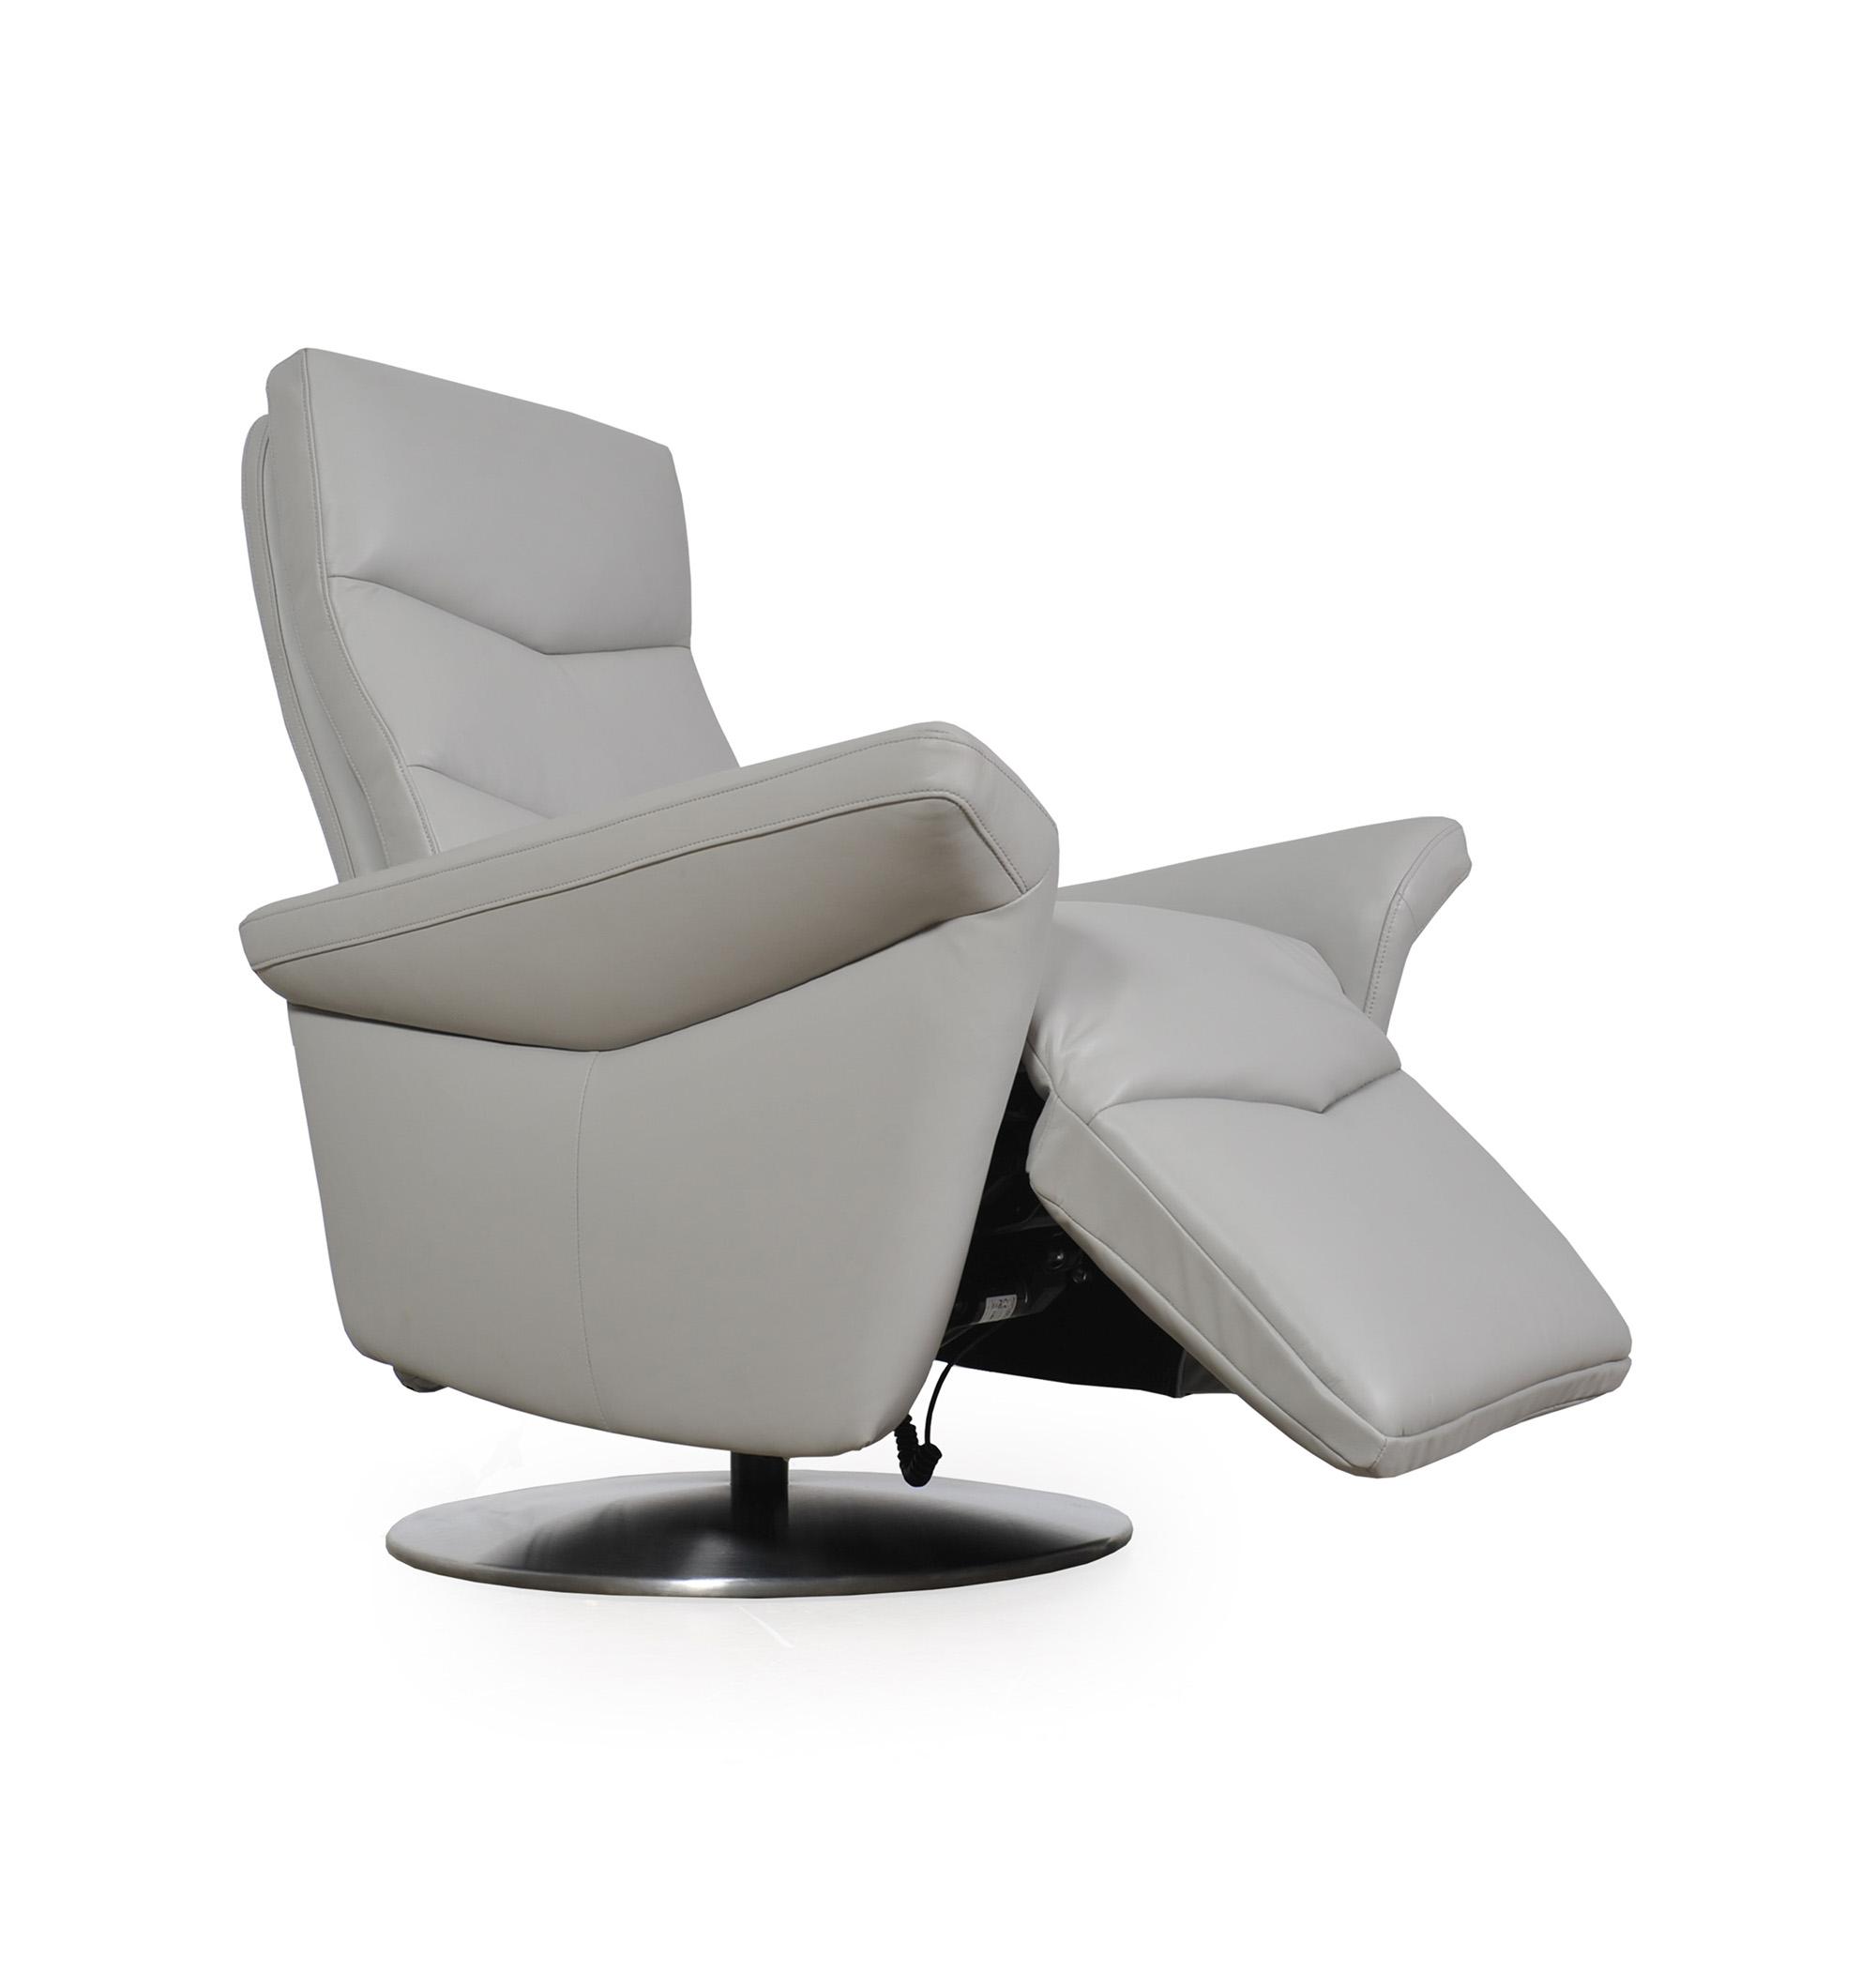 Contemporary, Modern Reclining Chair 589 - Melker 58939B1192 in Light Gray Top grain leather